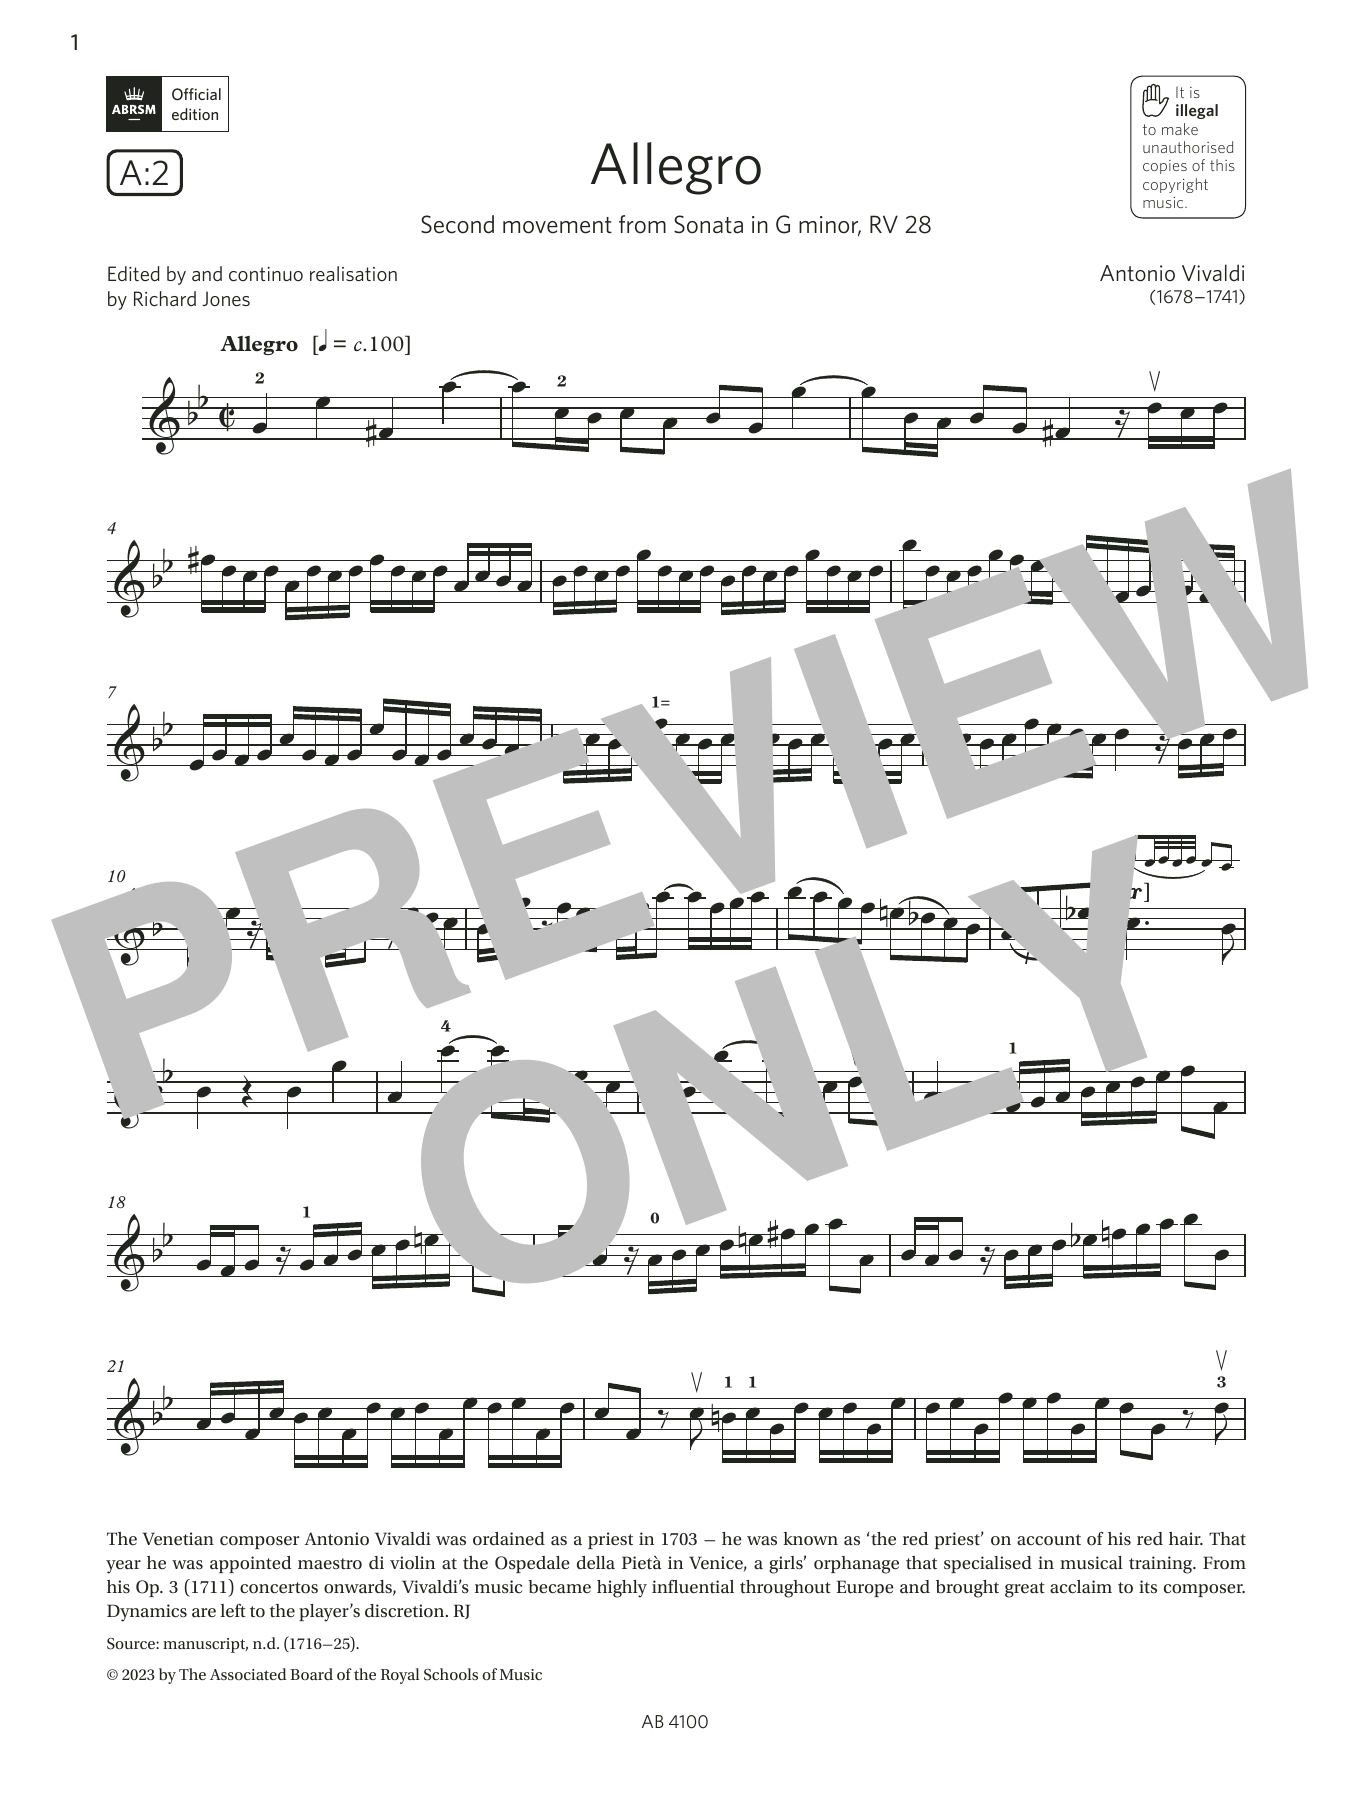 Download Antonio Vivaldi Allegro (Grade 6, A2, from the ABRSM Vi Sheet Music